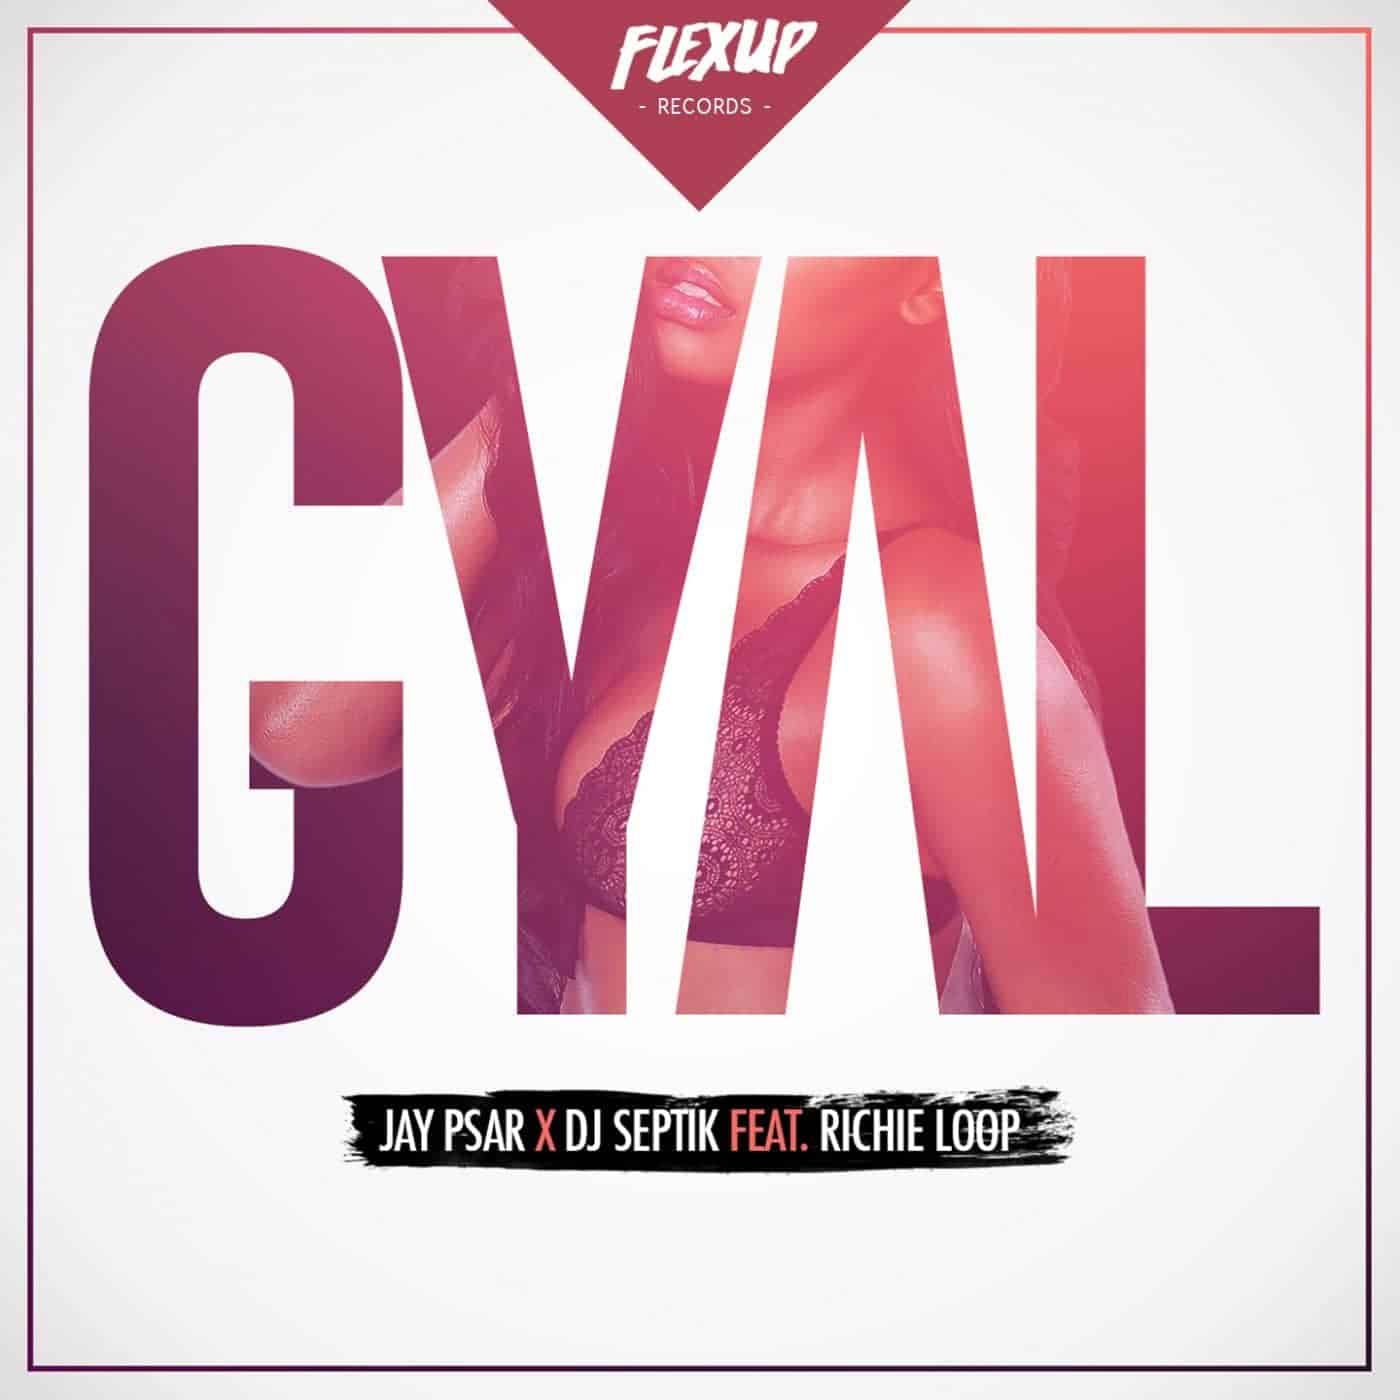 Jay Psar x Dj Septik feat. Richie Loop - Gyal